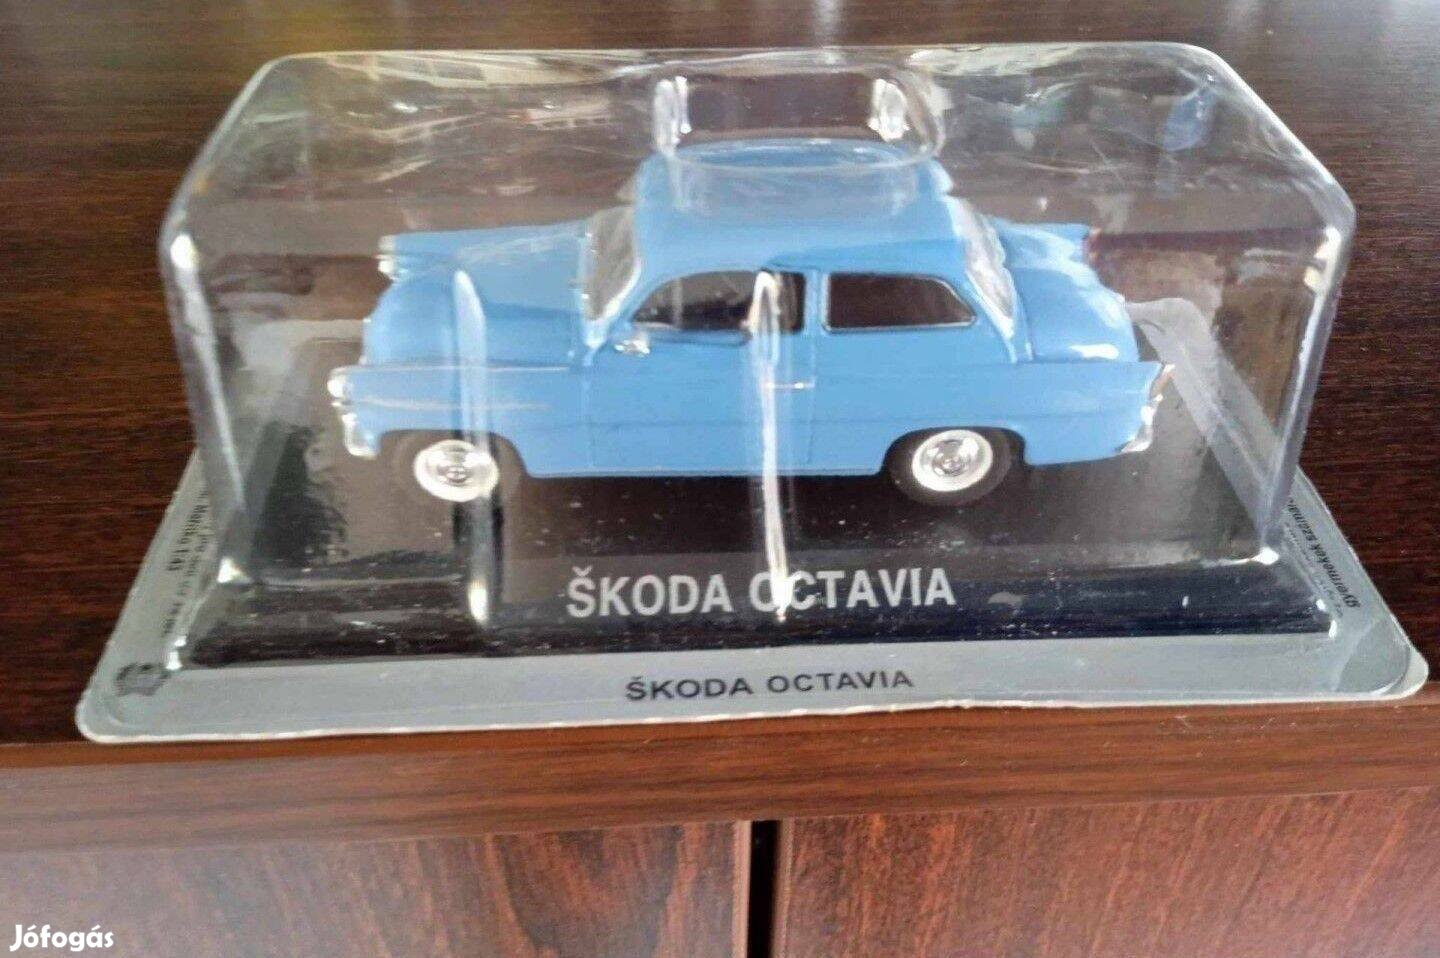 Skoda oktavia kisauto modell 1/43 Eladó